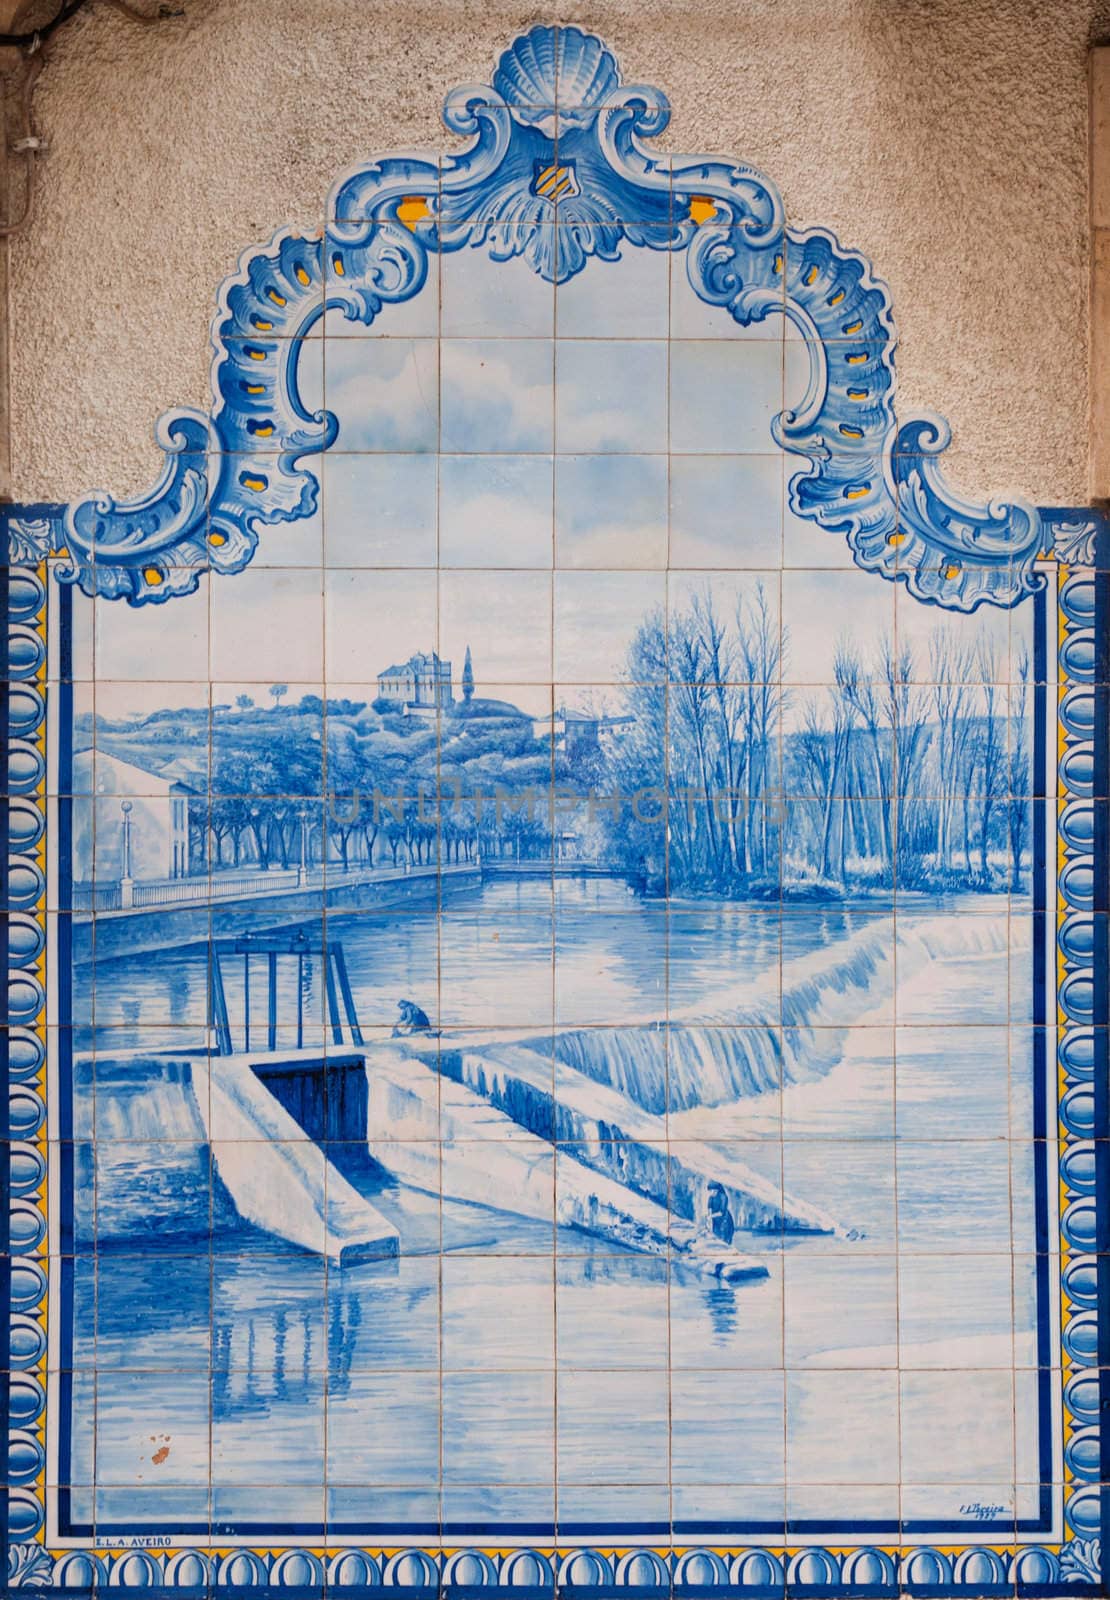 Tomar azulejos wall by luissantos84